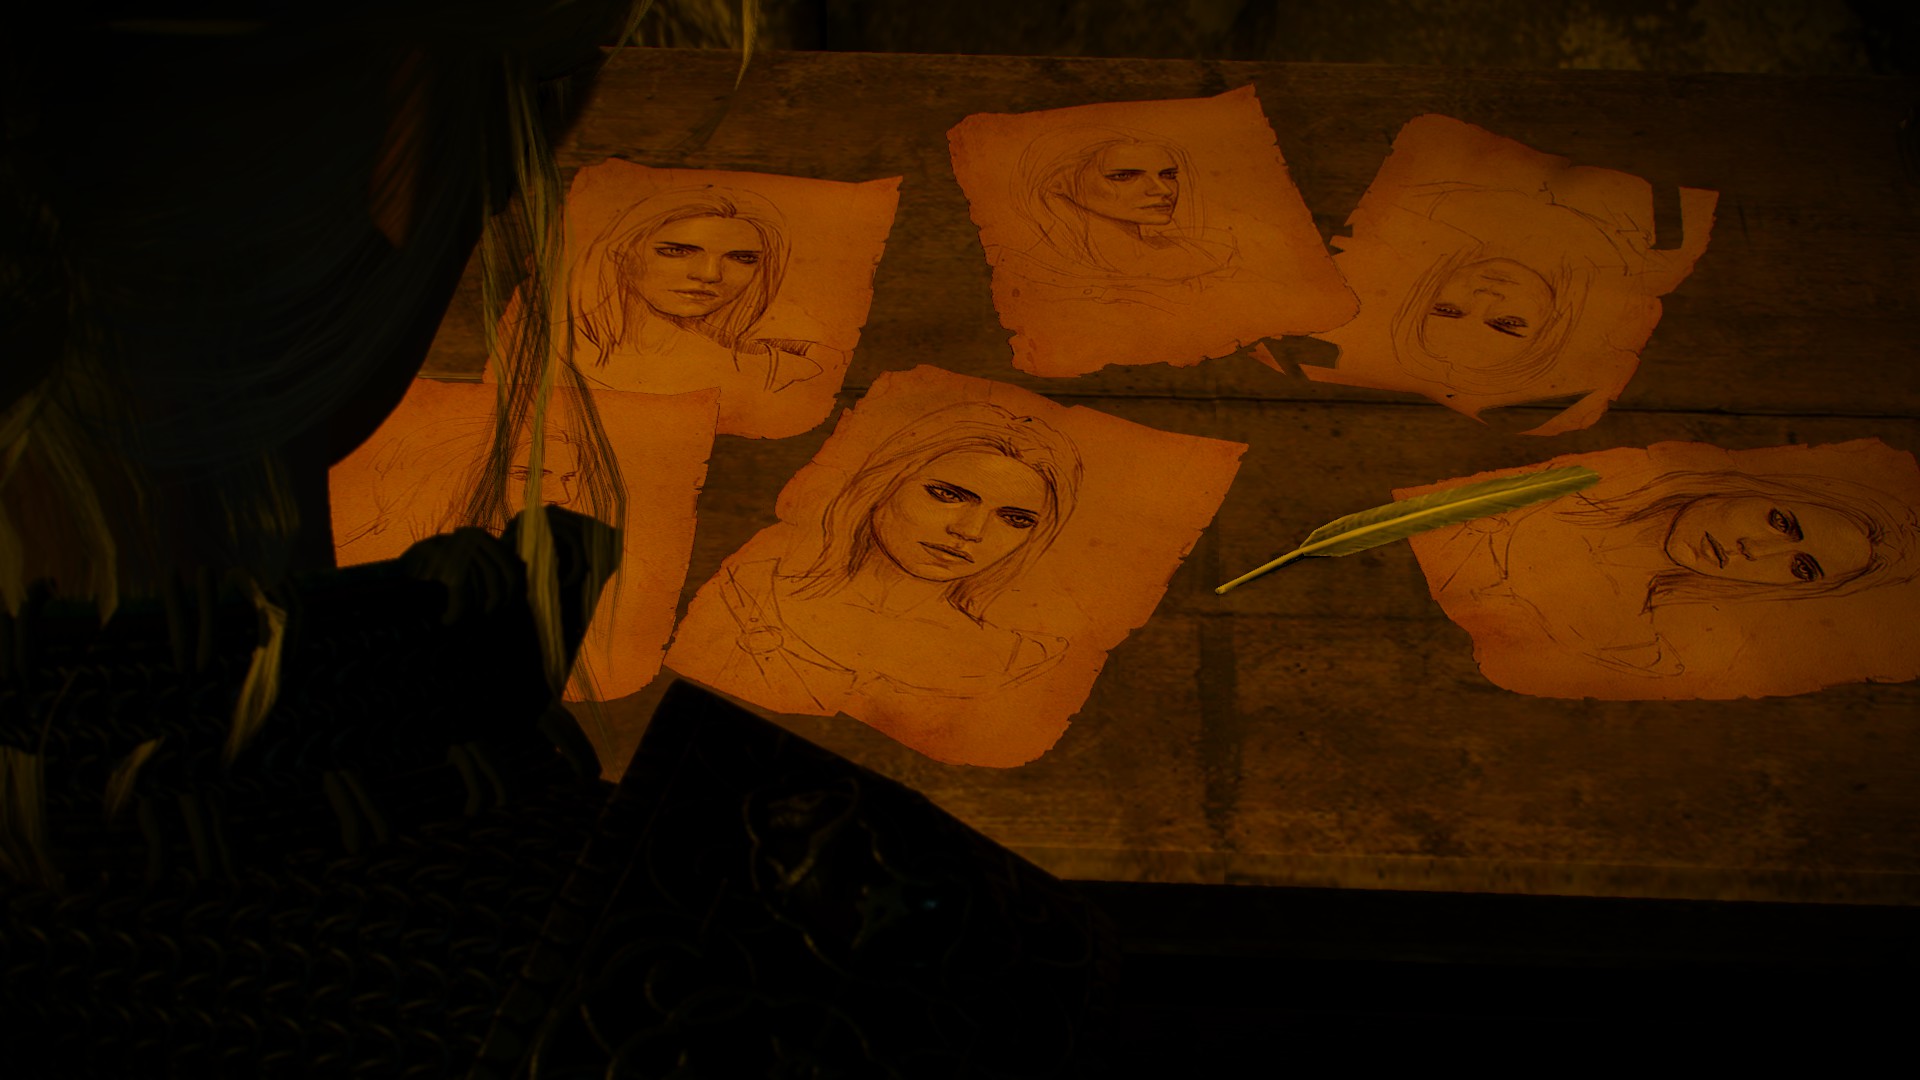 The Witcher 3, As Told Through Beautiful Screenshots